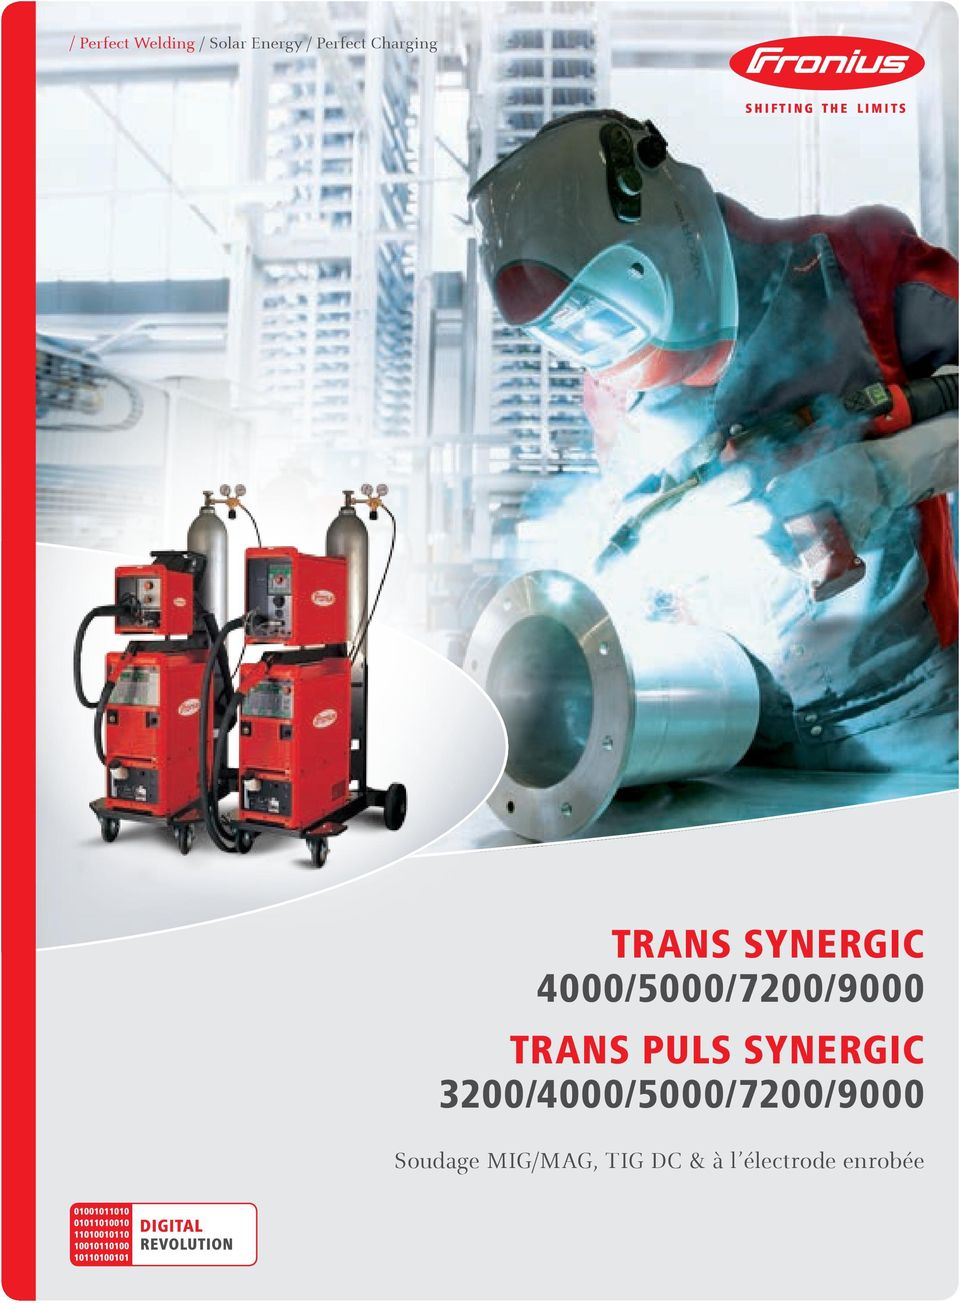 Trans Puls Synergic 3200/4000/5000/7200/9000